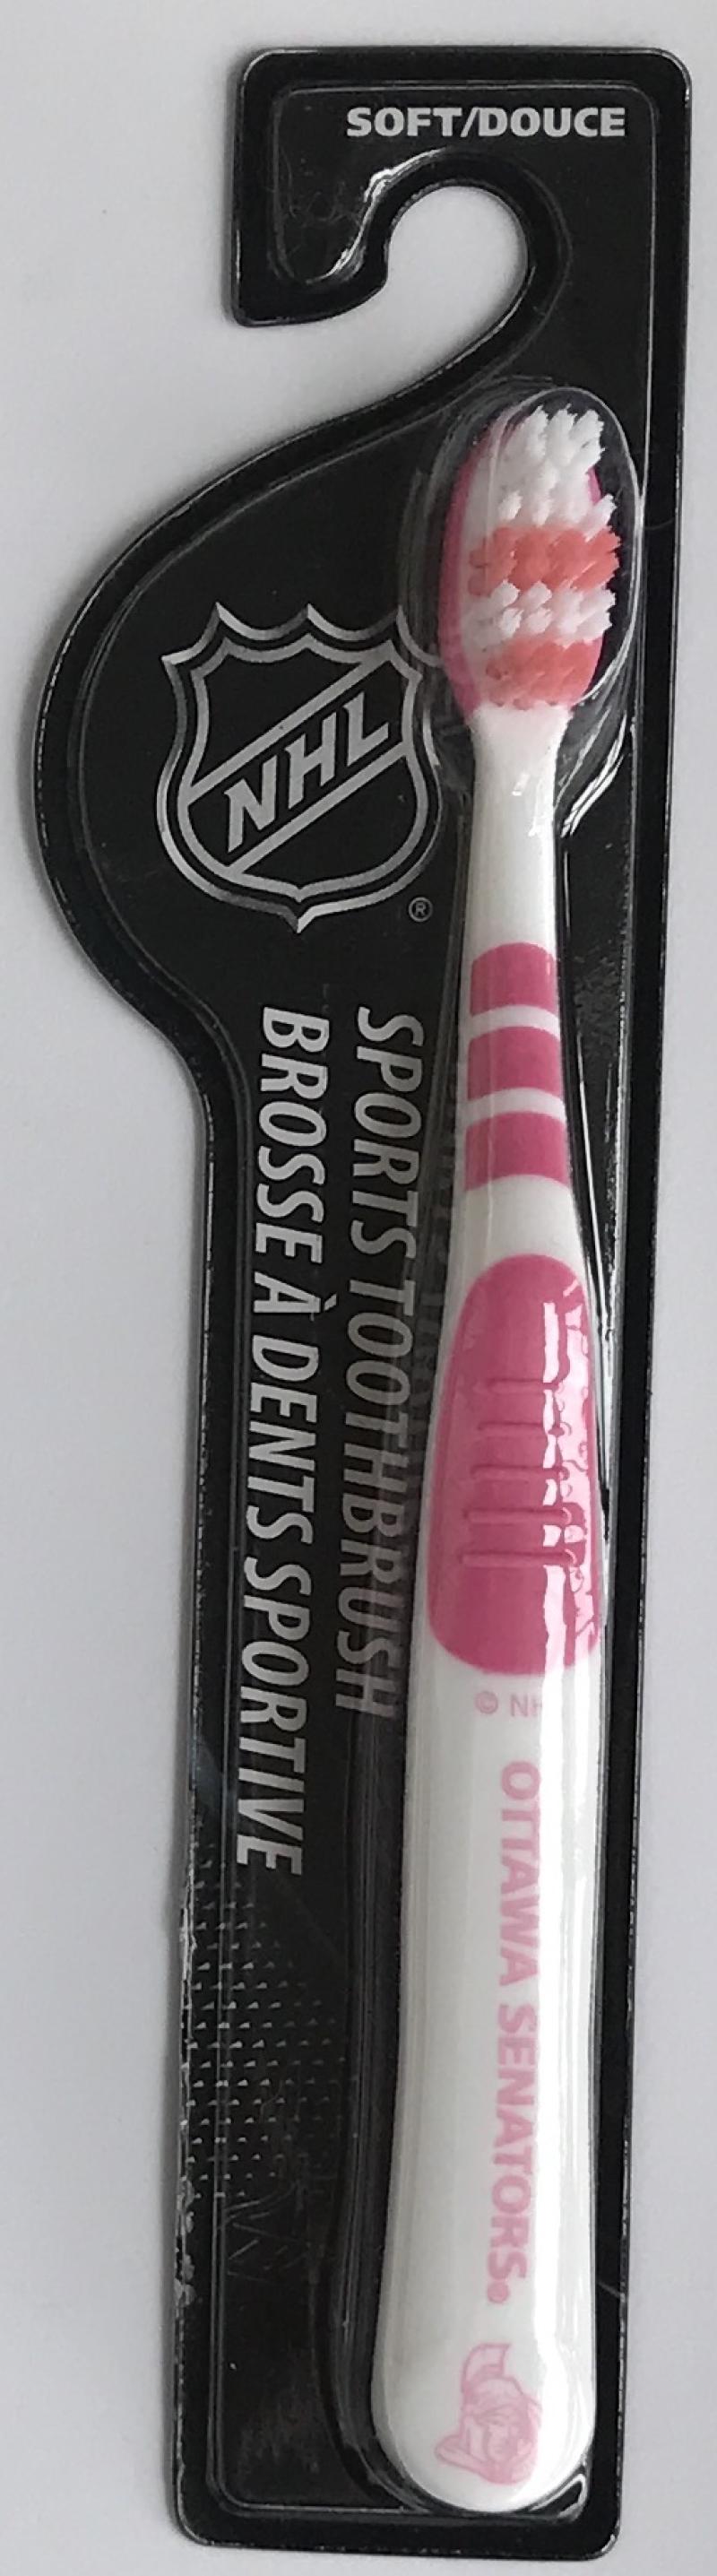 Ottawa Senators Soft Head NHL Sports Toothbrush - New in Package Image 1